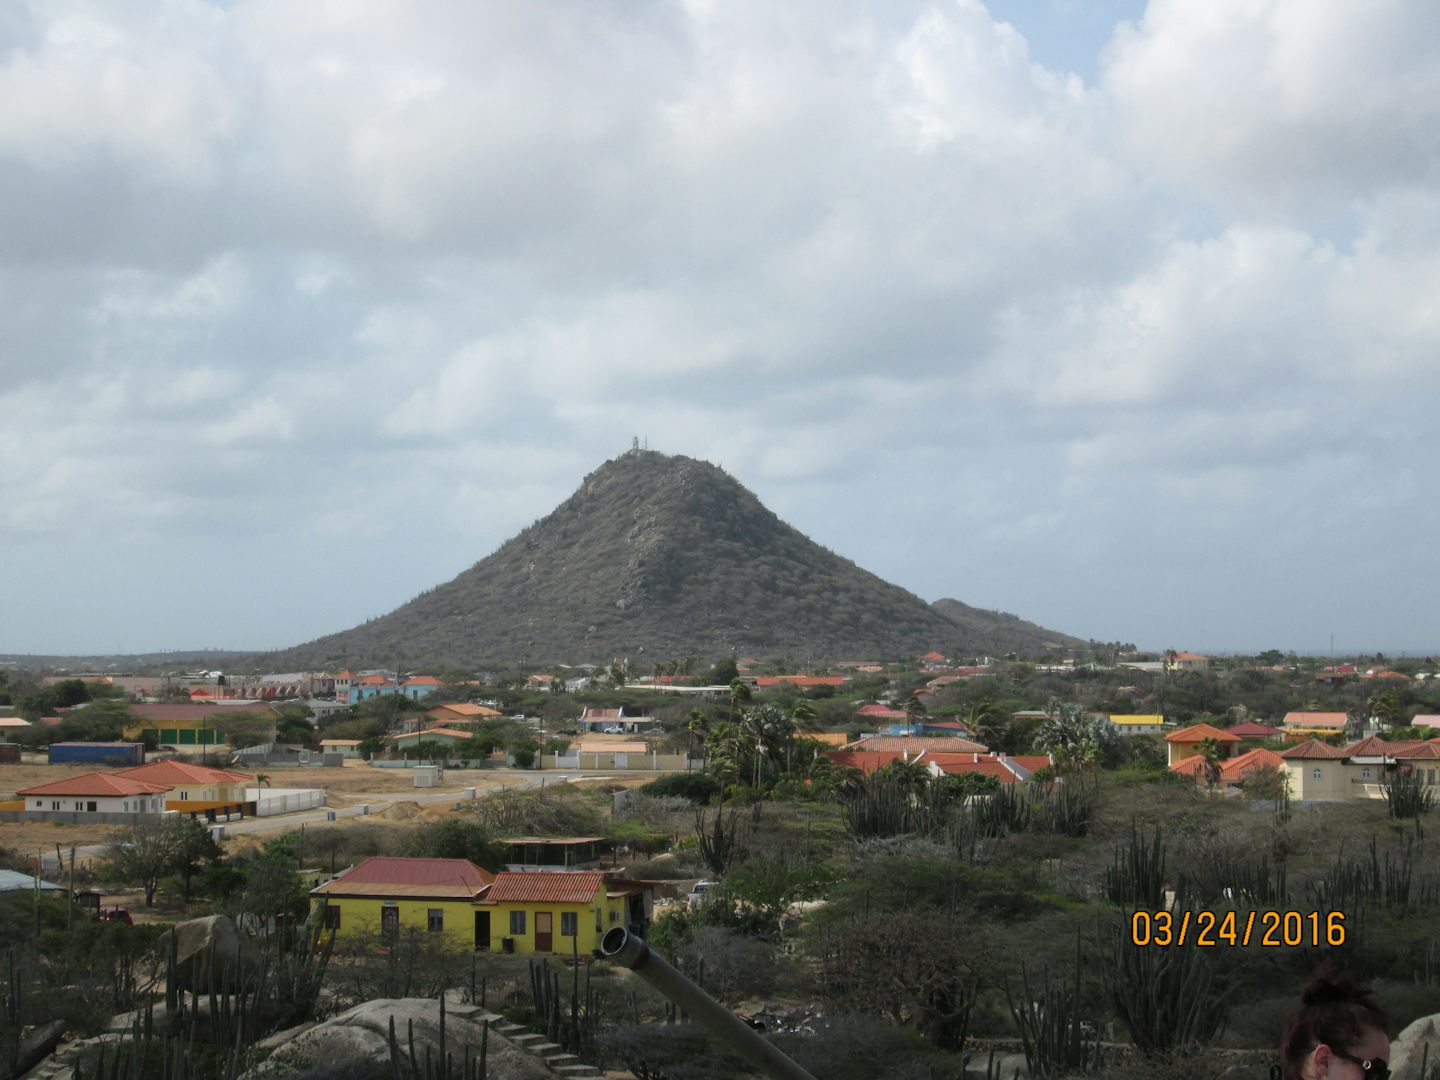 More Aruba sites